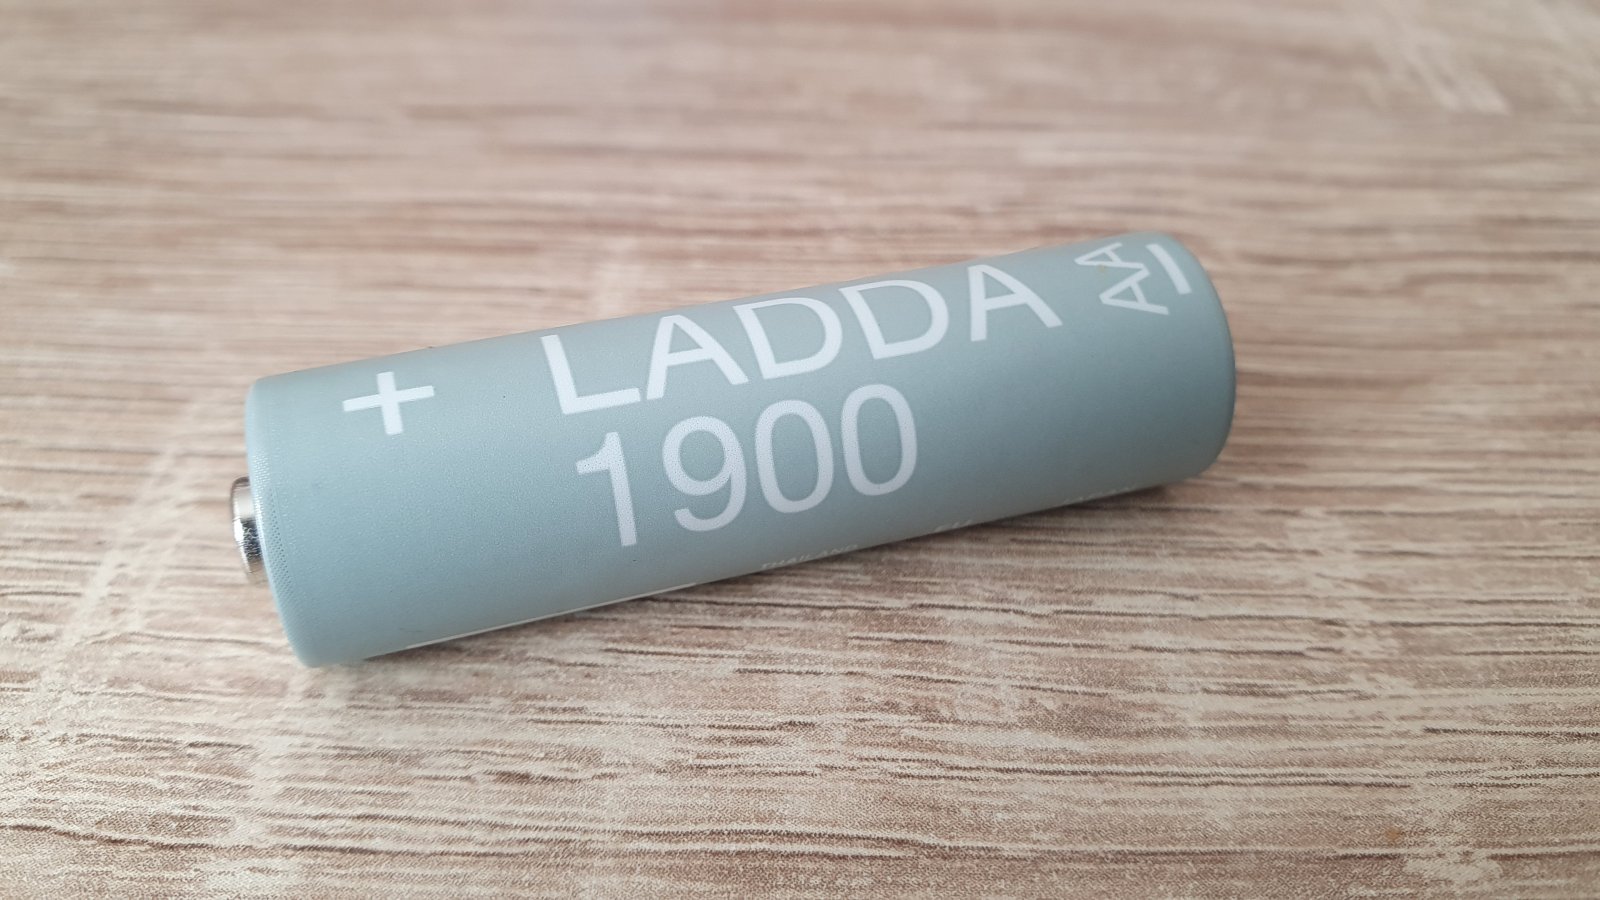 IKEA LADDA 1900